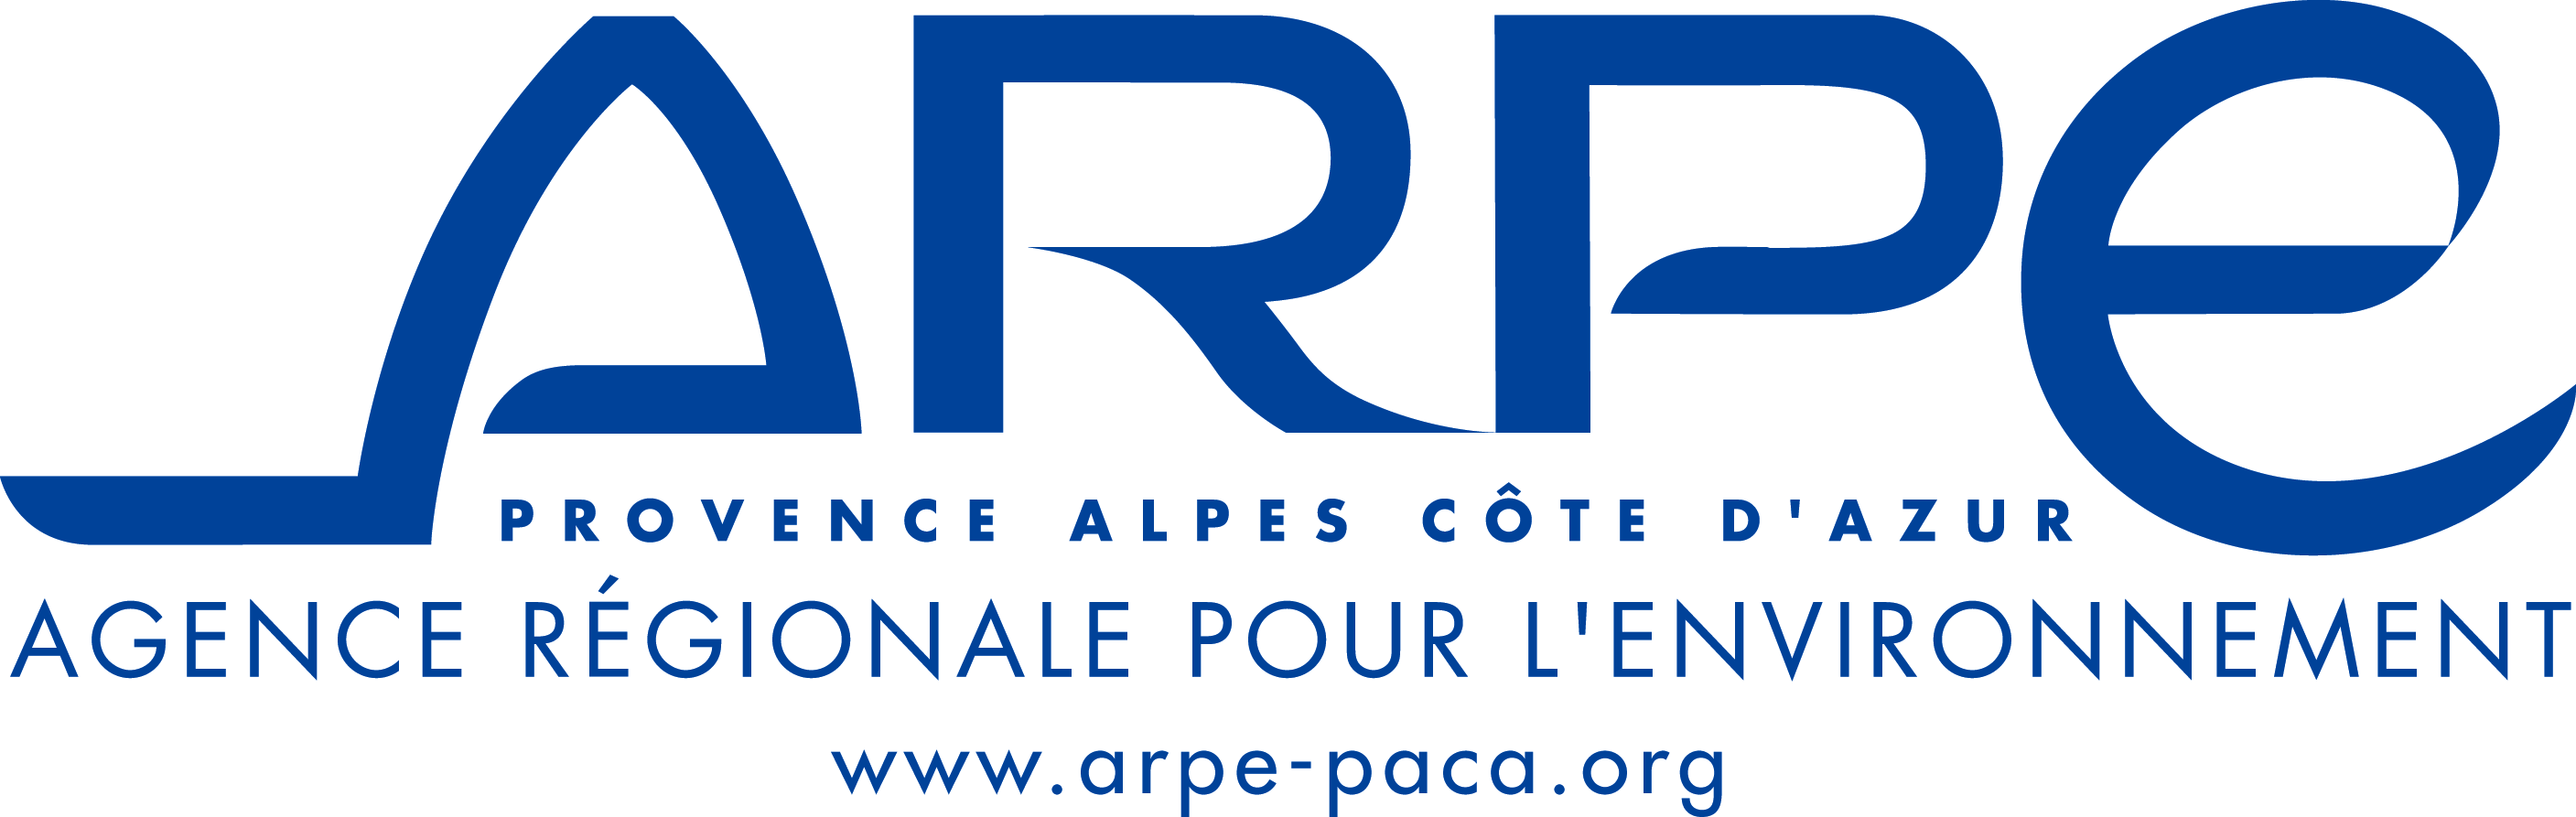 http://www.arpe-paca.org/